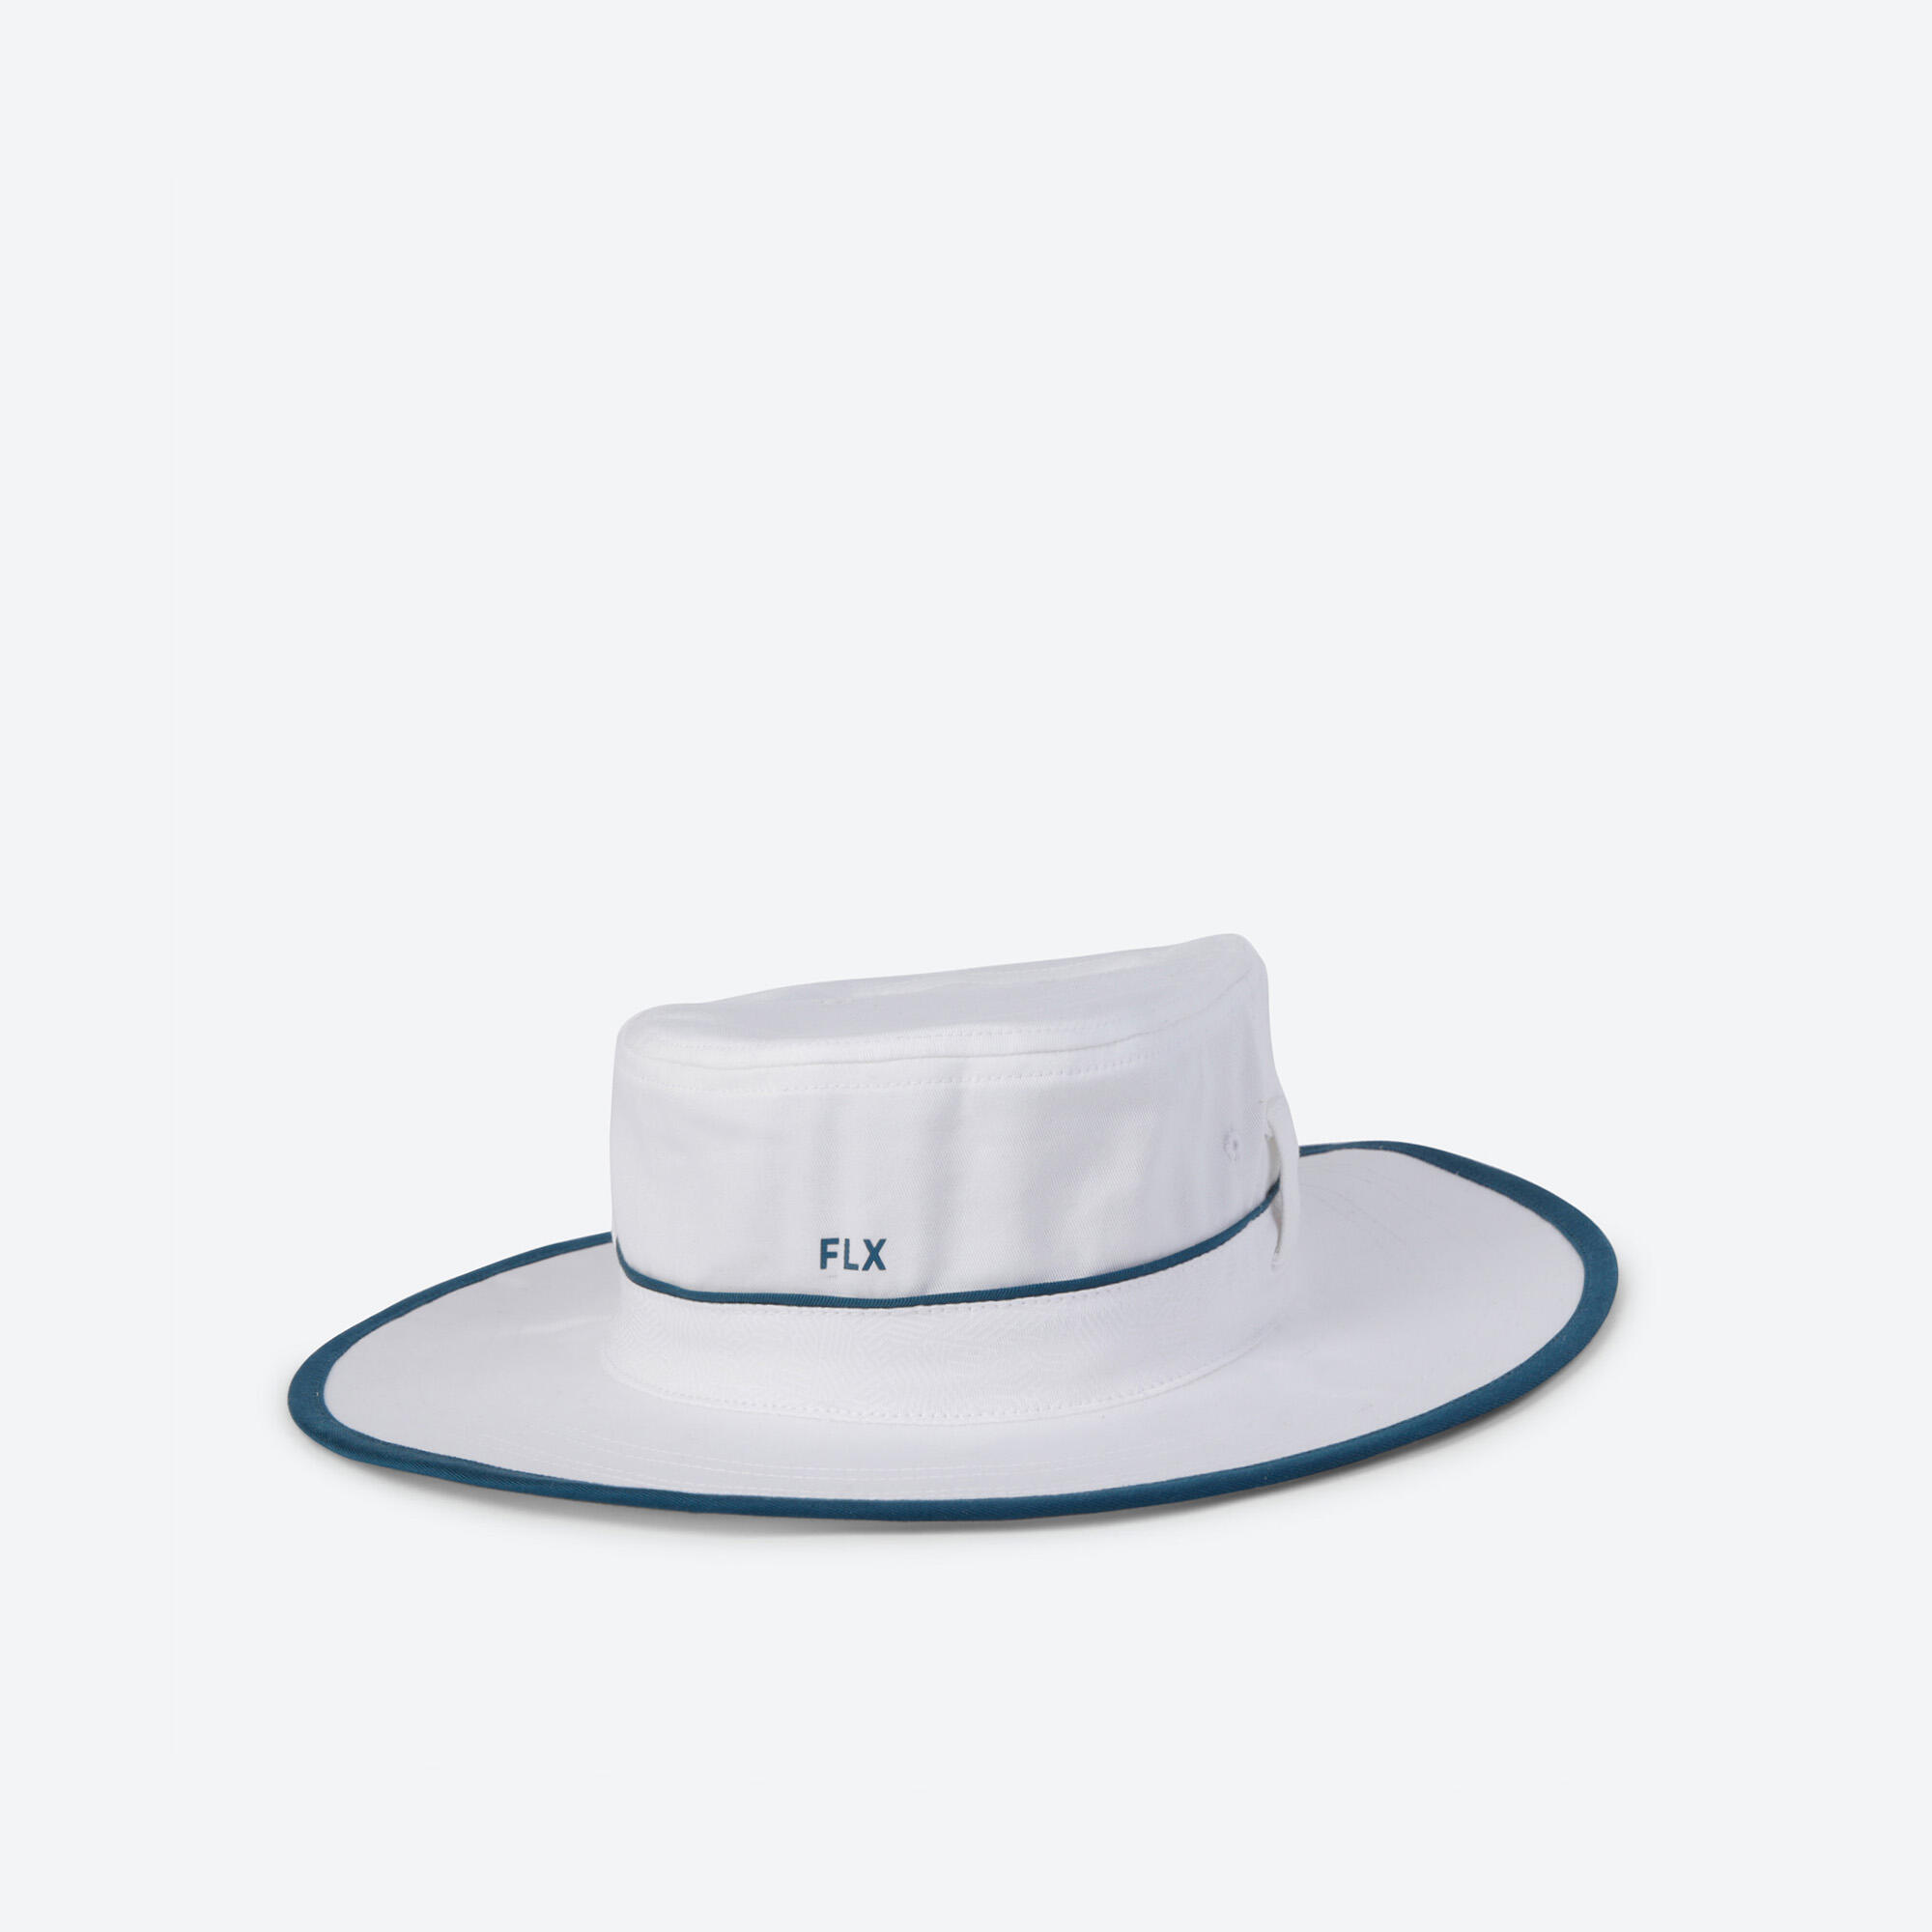 FLX UV PROTECTION CRICKET HAT WHITE